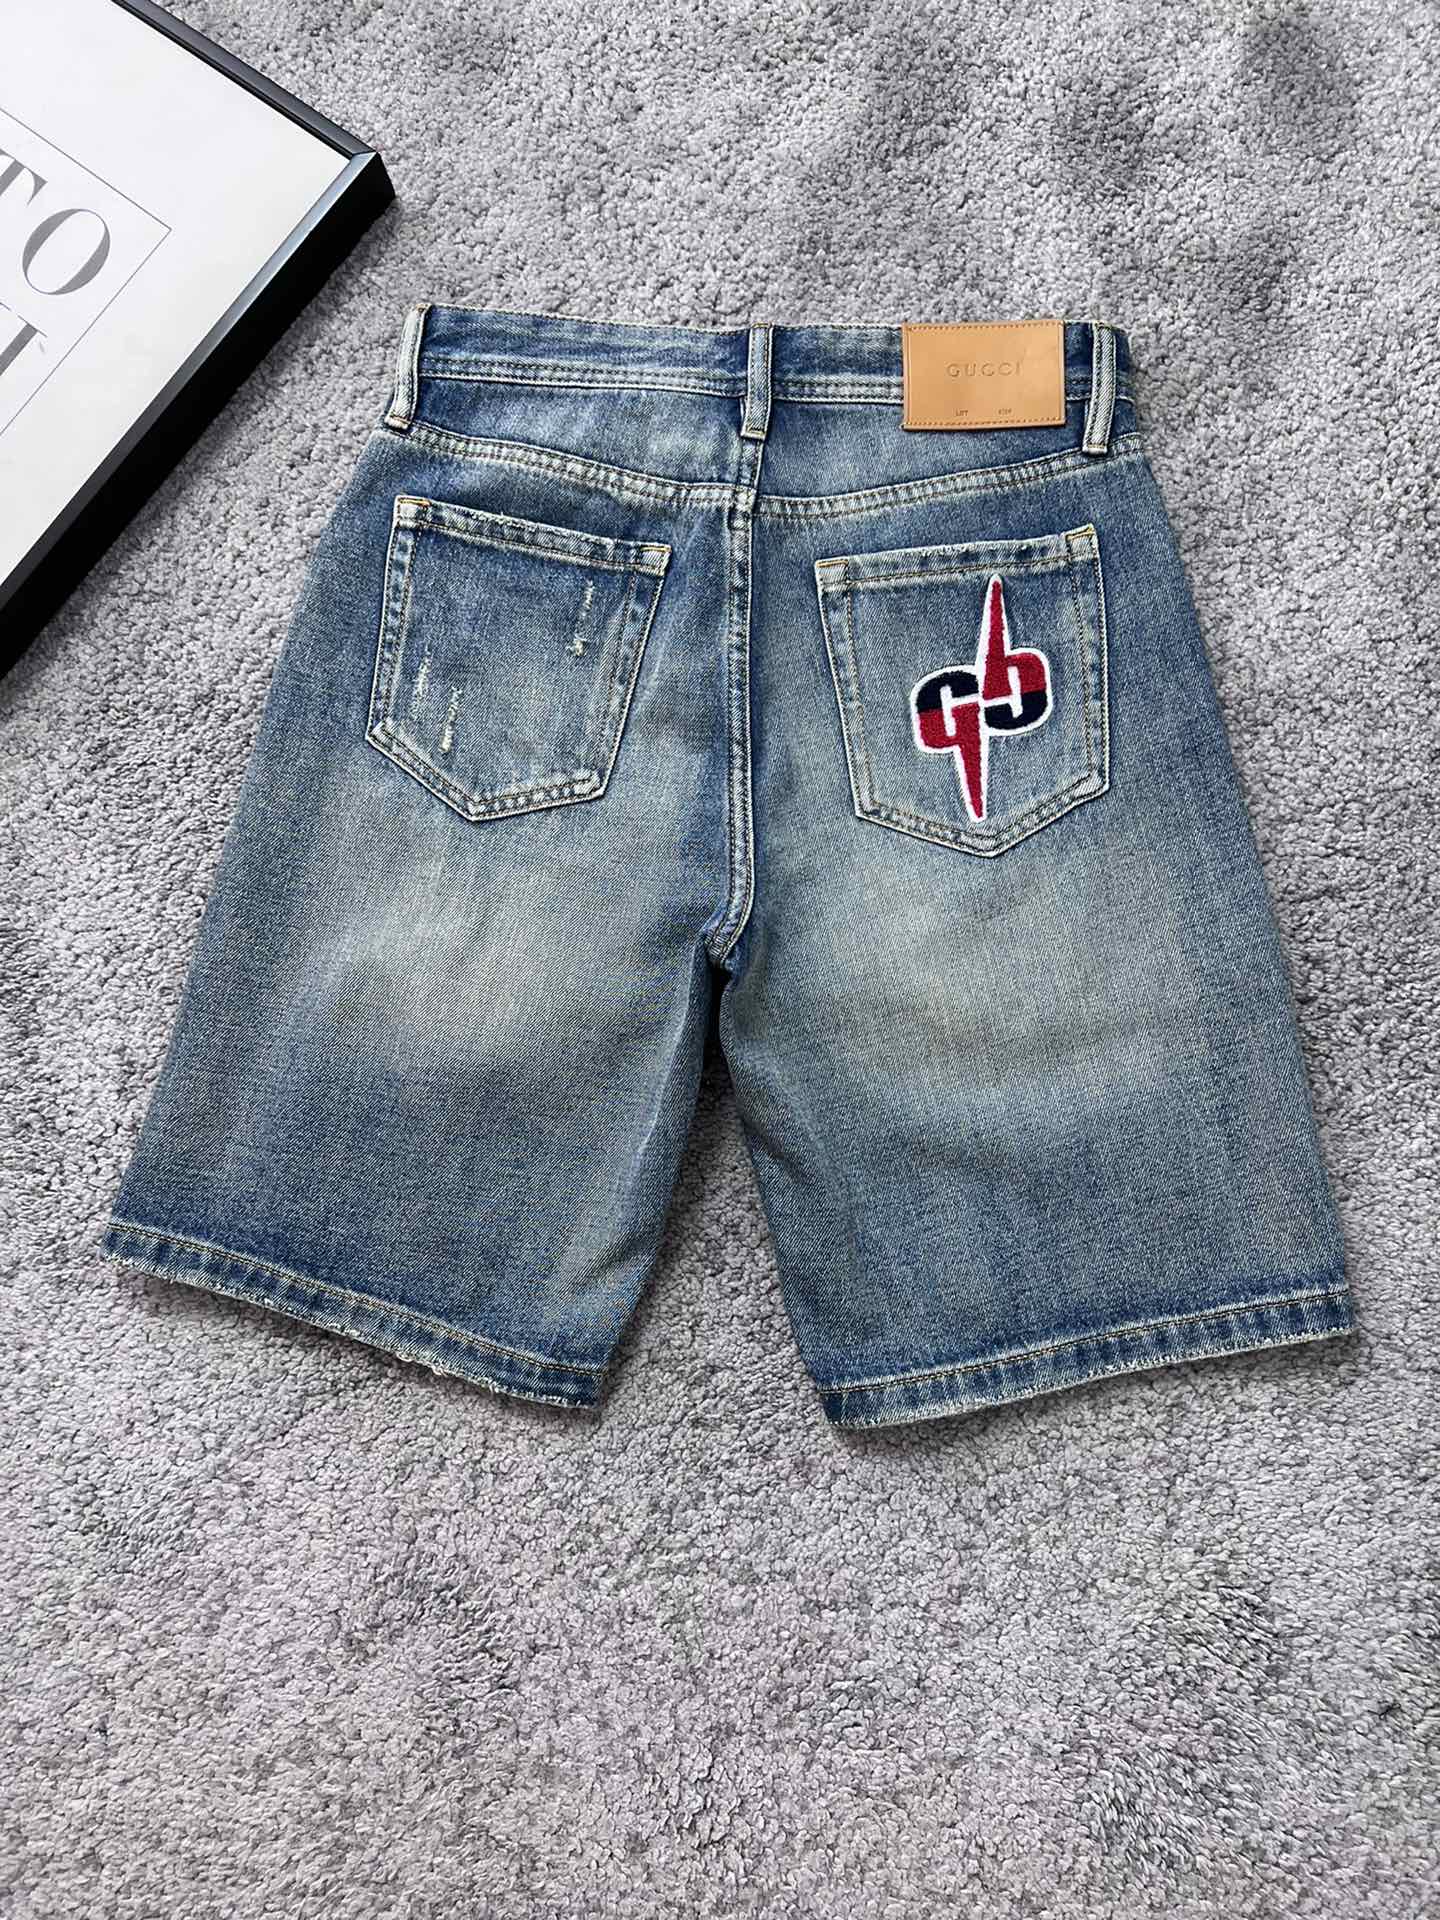 Gucci Denim Shorts For Men # 270748, cheap Shorts Gucci Shorts, only $42!